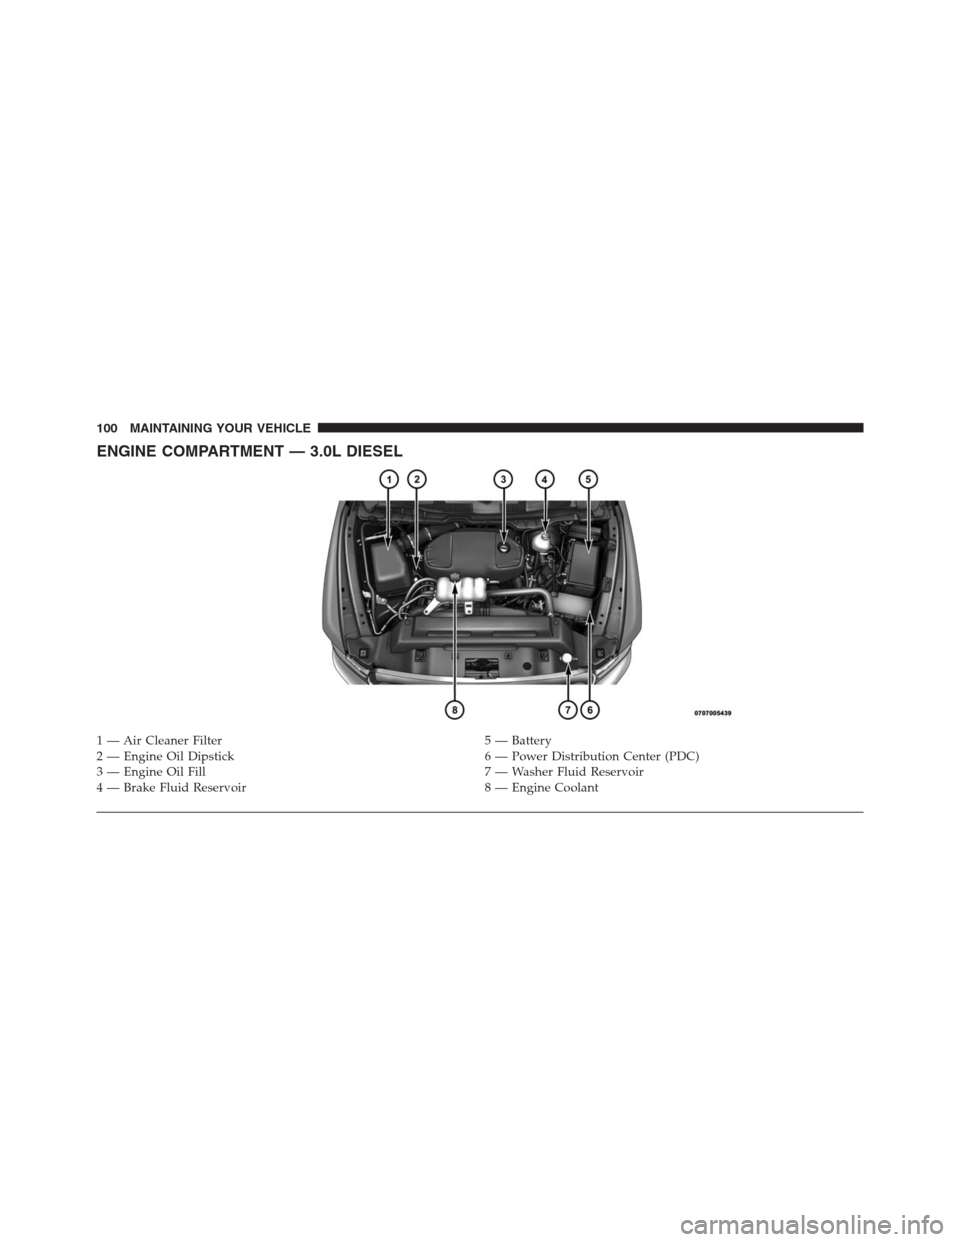 Ram 3500 2014  Diesel Supplement ENGINE COMPARTMENT — 3.0L DIESEL
1 — Air Cleaner Filter 5 — Battery
2 — Engine Oil Dipstick 6 — Power Distribution Center (PDC)
3 — Engine Oil Fill 7 — Washer Fluid Reservoir
4 — Brake